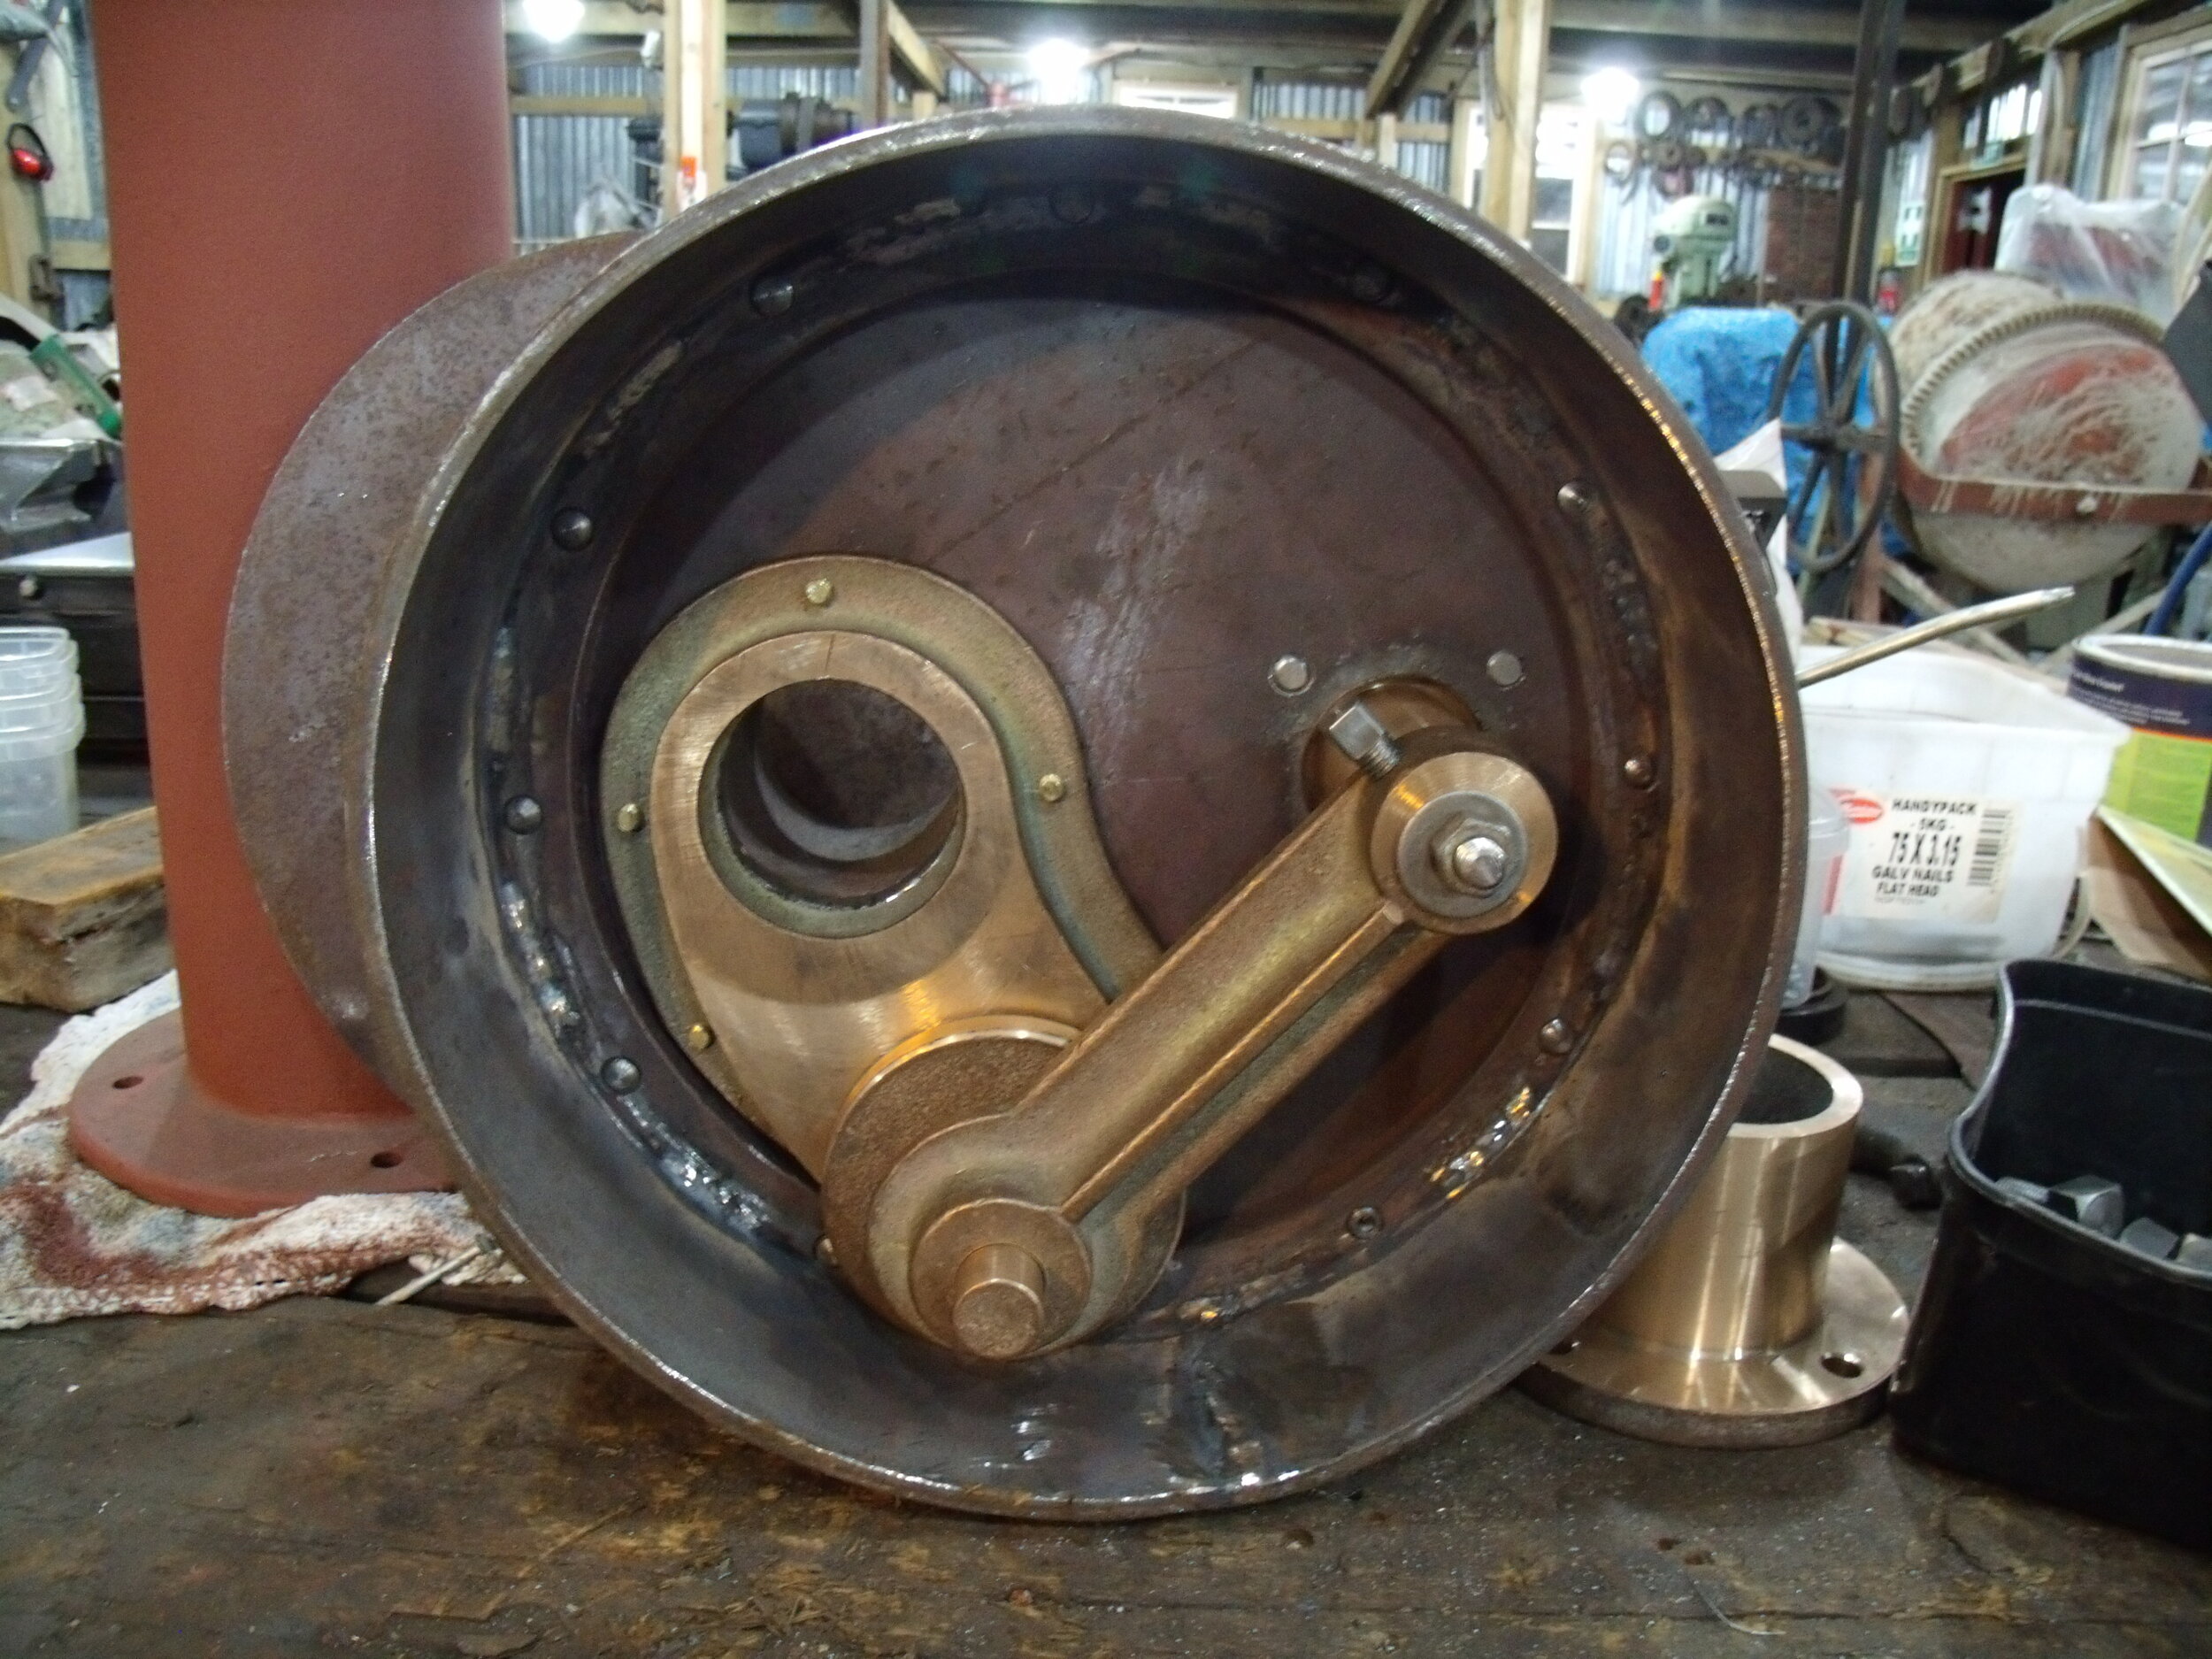 Impressive looking steam swing valve